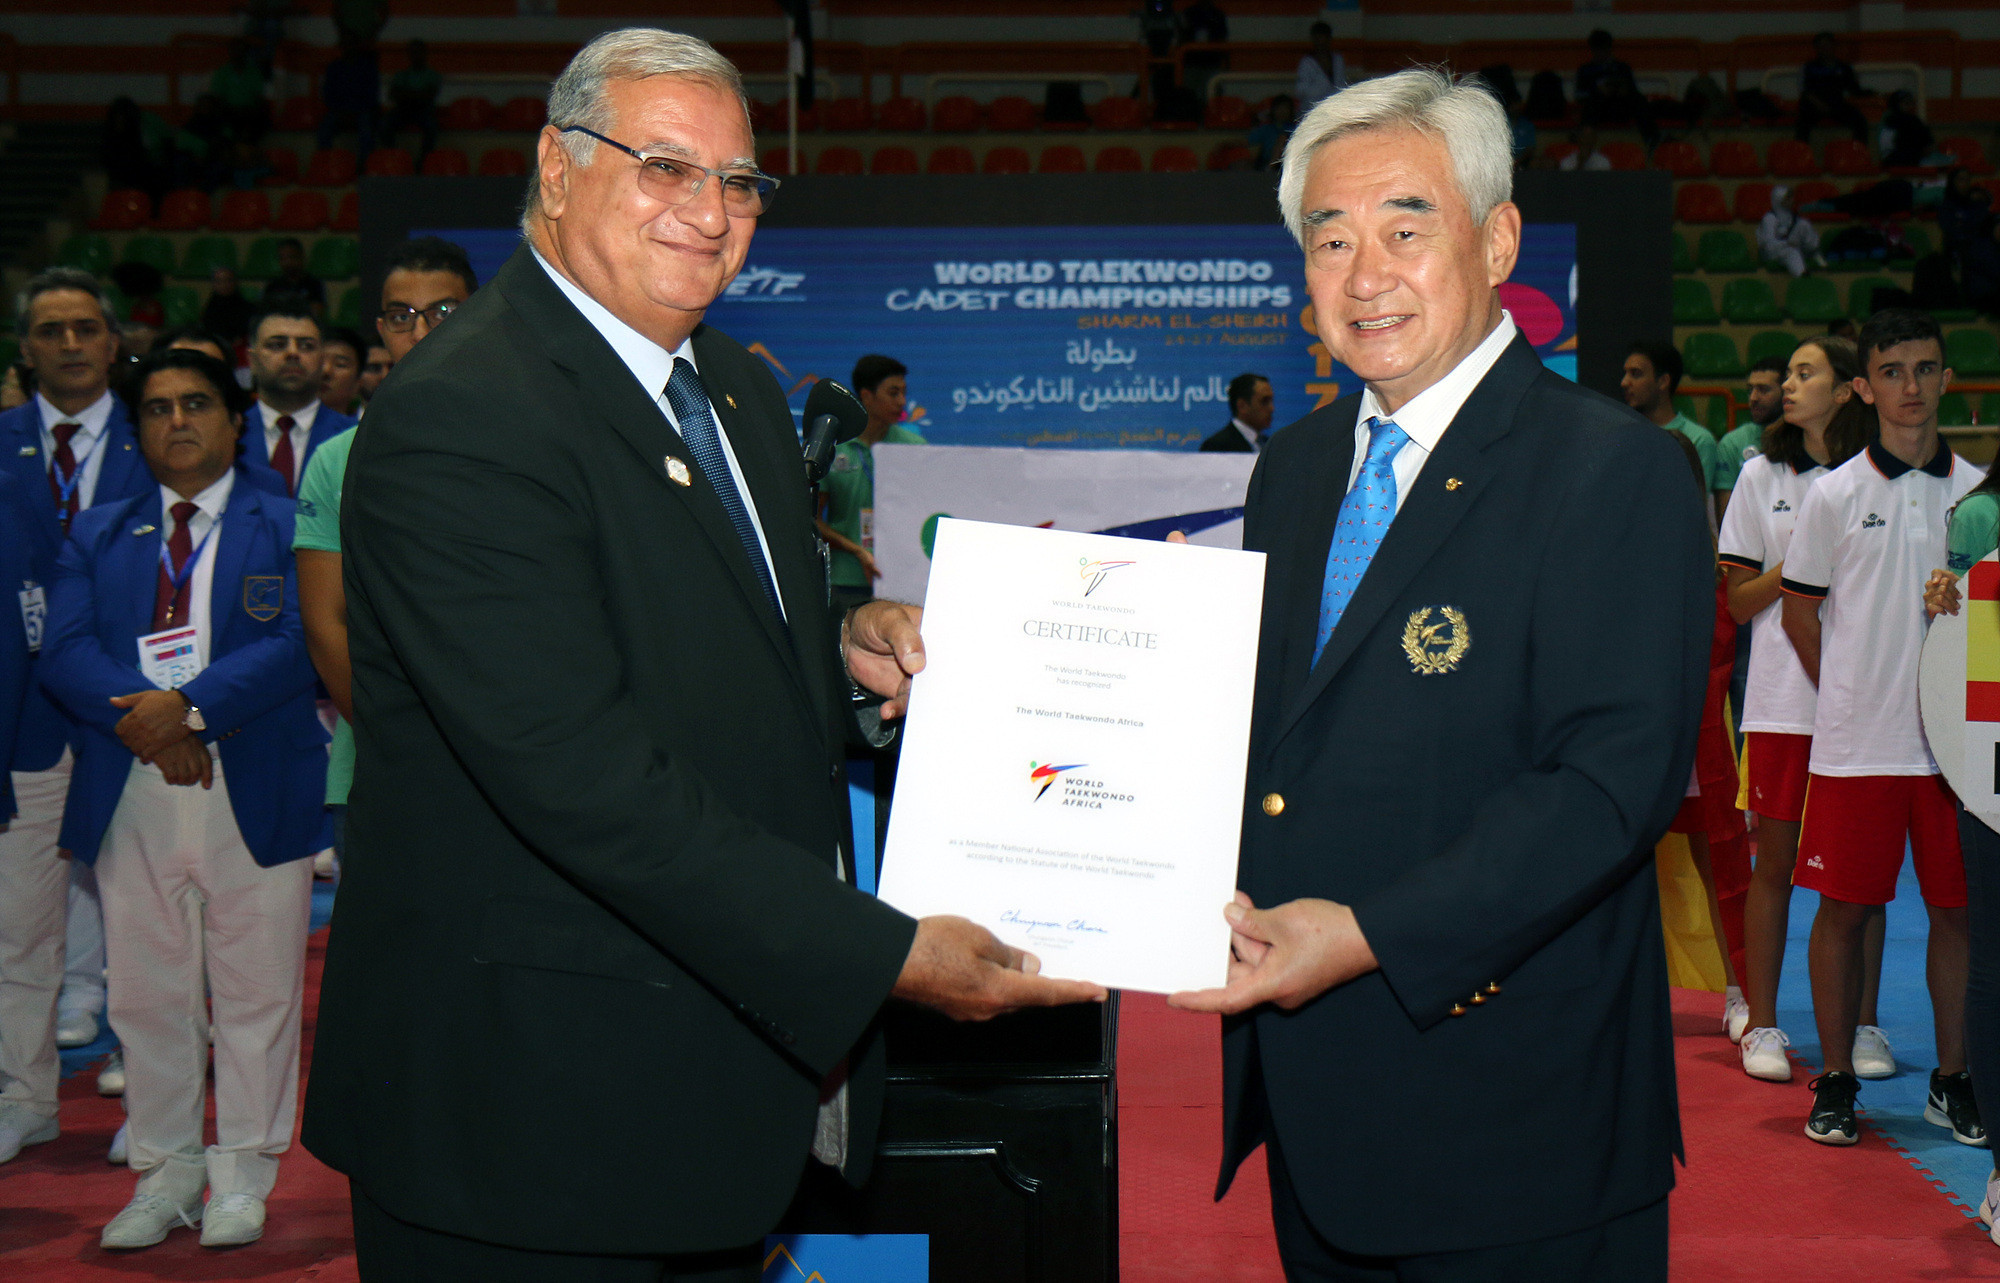 Ahmed Fouly joined the World Taekwondo Council in 2001 ©World Taekwondo